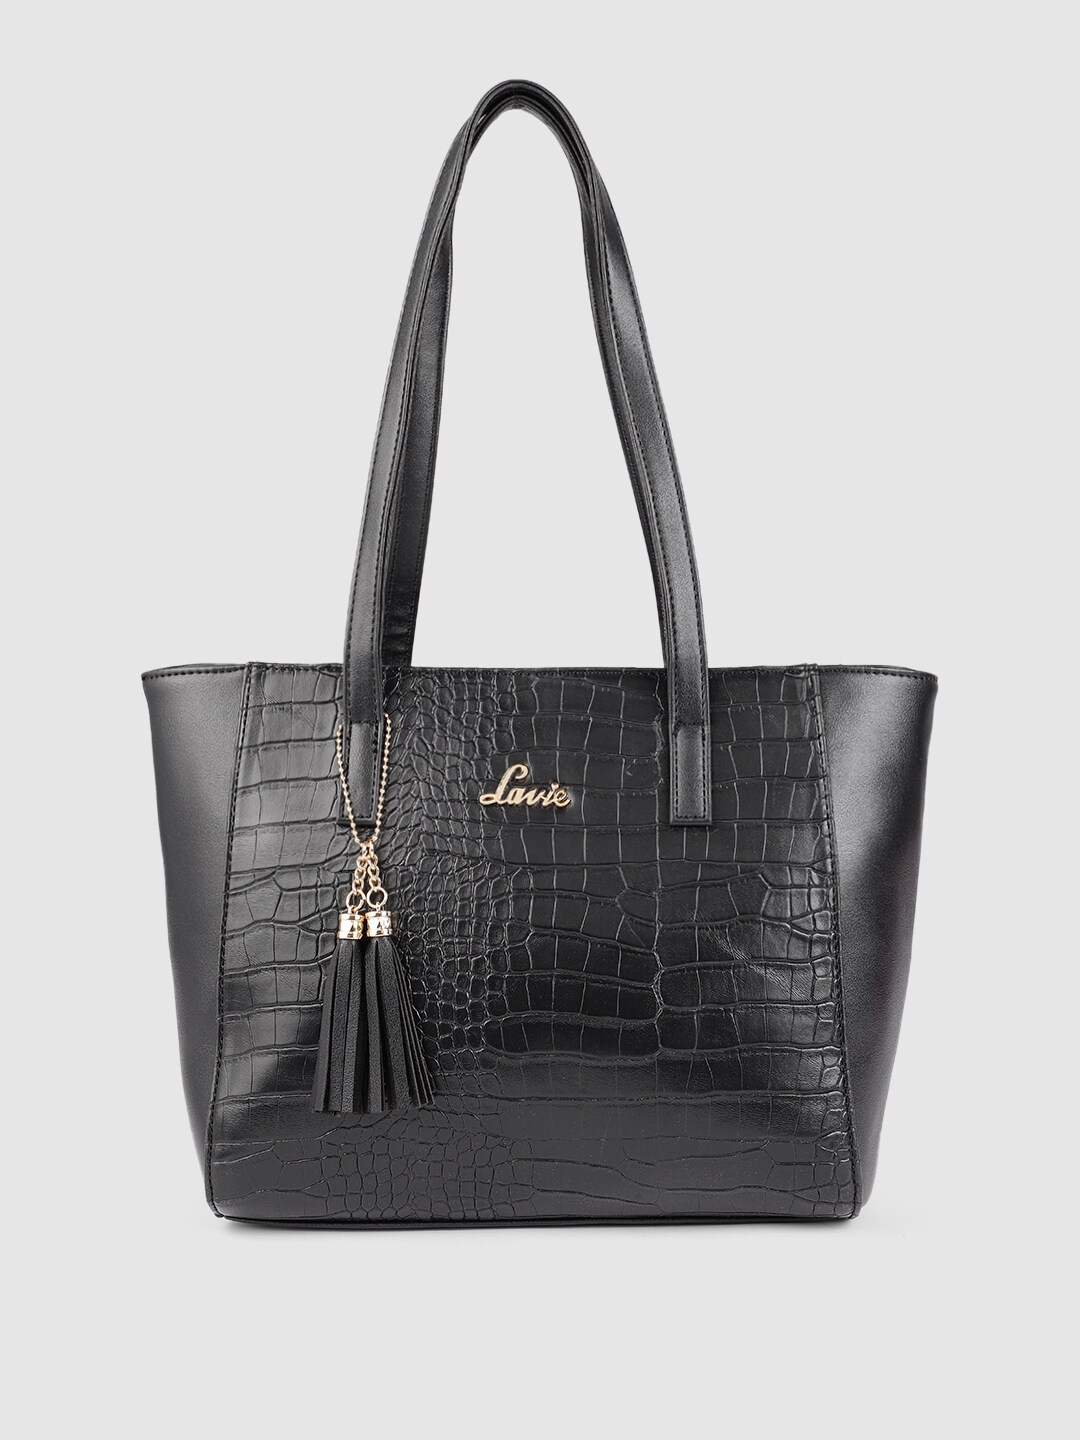 Lavie Black Animal Textured Structured Shoulder Bag with Tassel Detailing Price in India